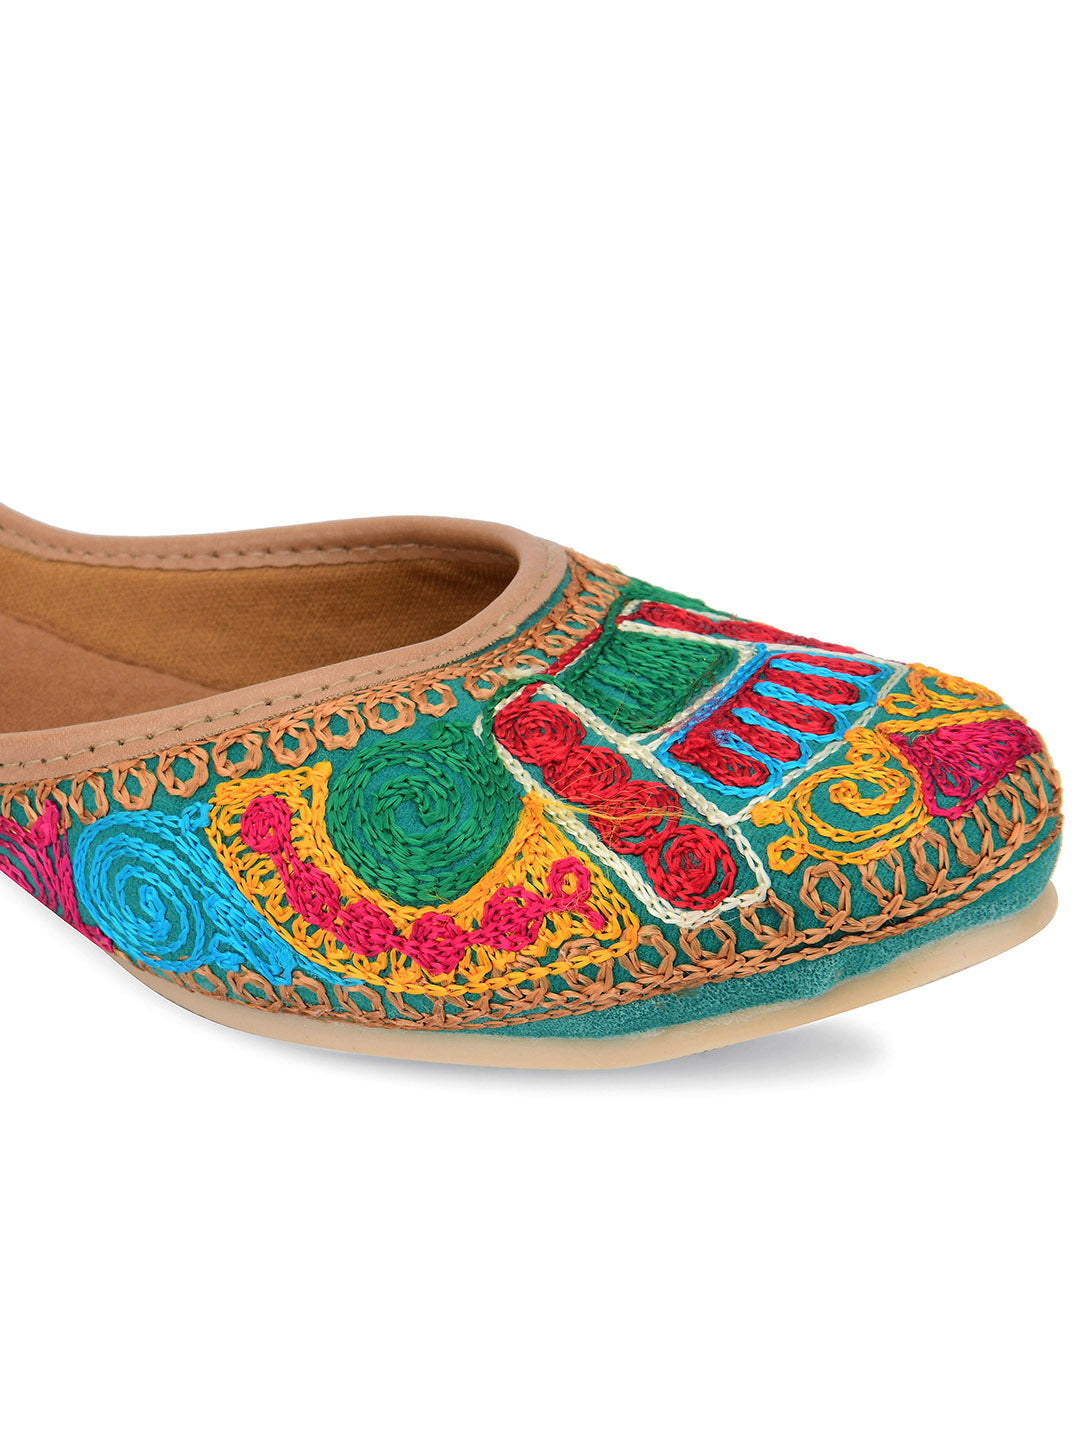 DESI COLOUR Women Multicoloured Embellished Ethnic Mojaris Flats